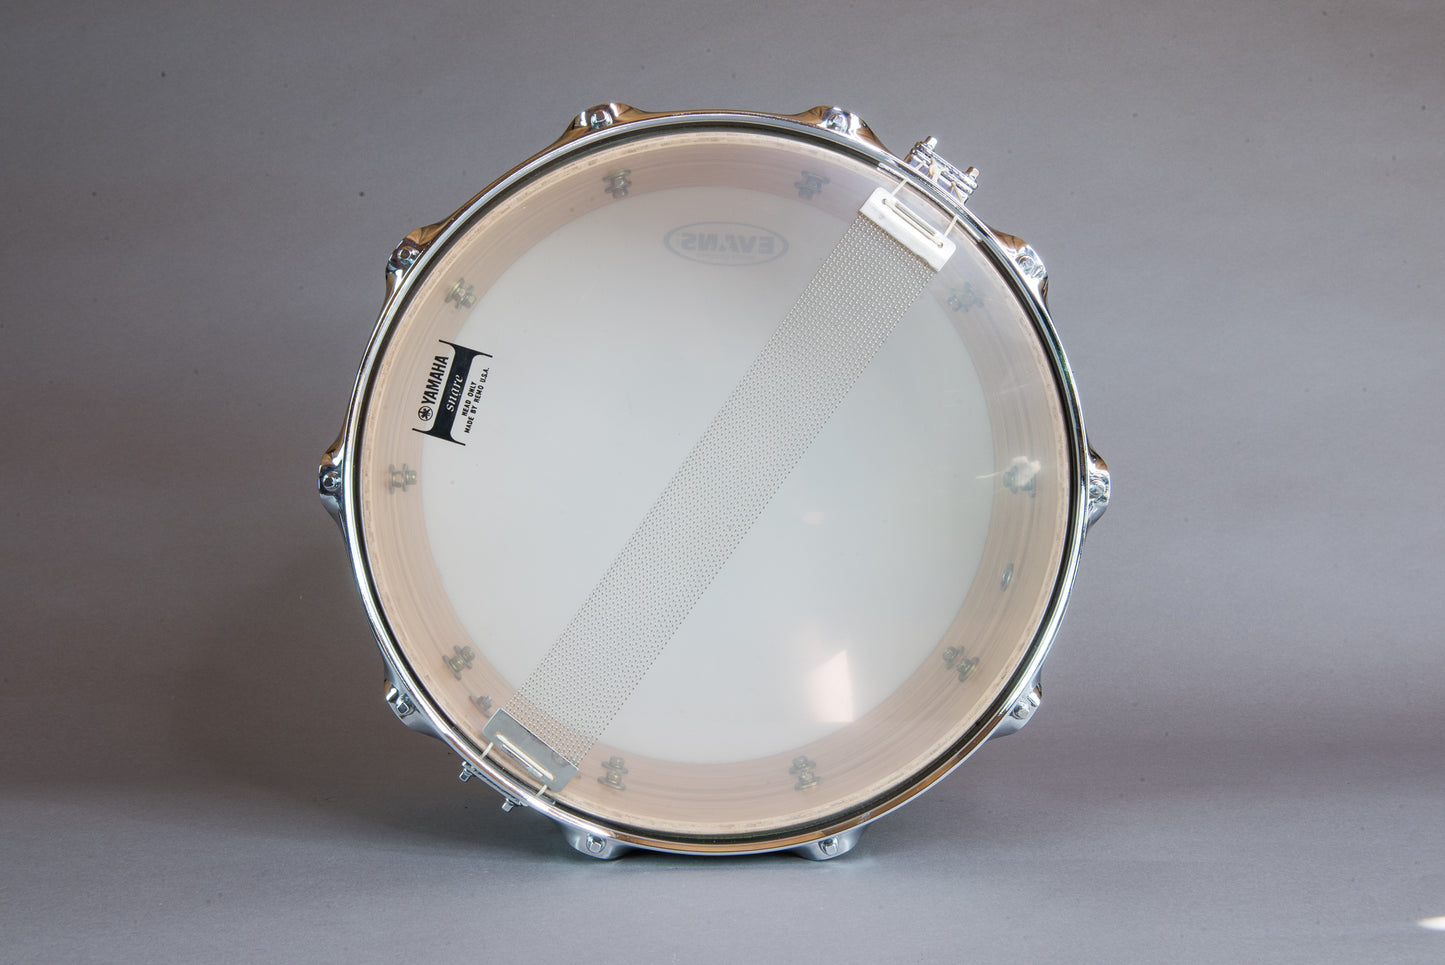 Yamaha 14" x 6.5" Custom Bamboo Snare Drum